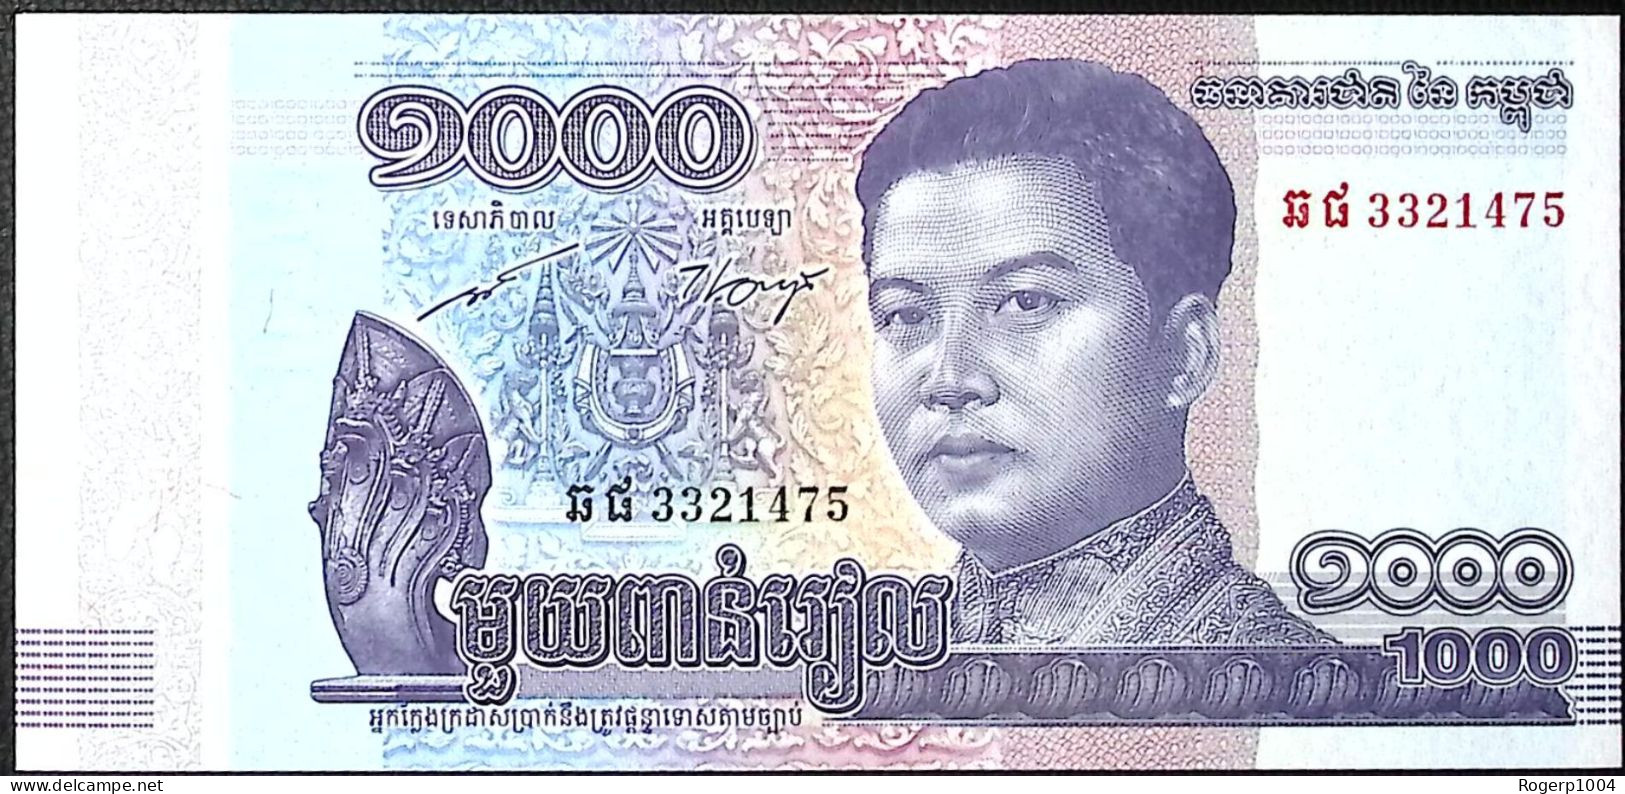 CAMBODGE/CAMBODIA * 1.000 Riels * Date 2016 * Etat/Grade NEUF/UNC * - Cambodia